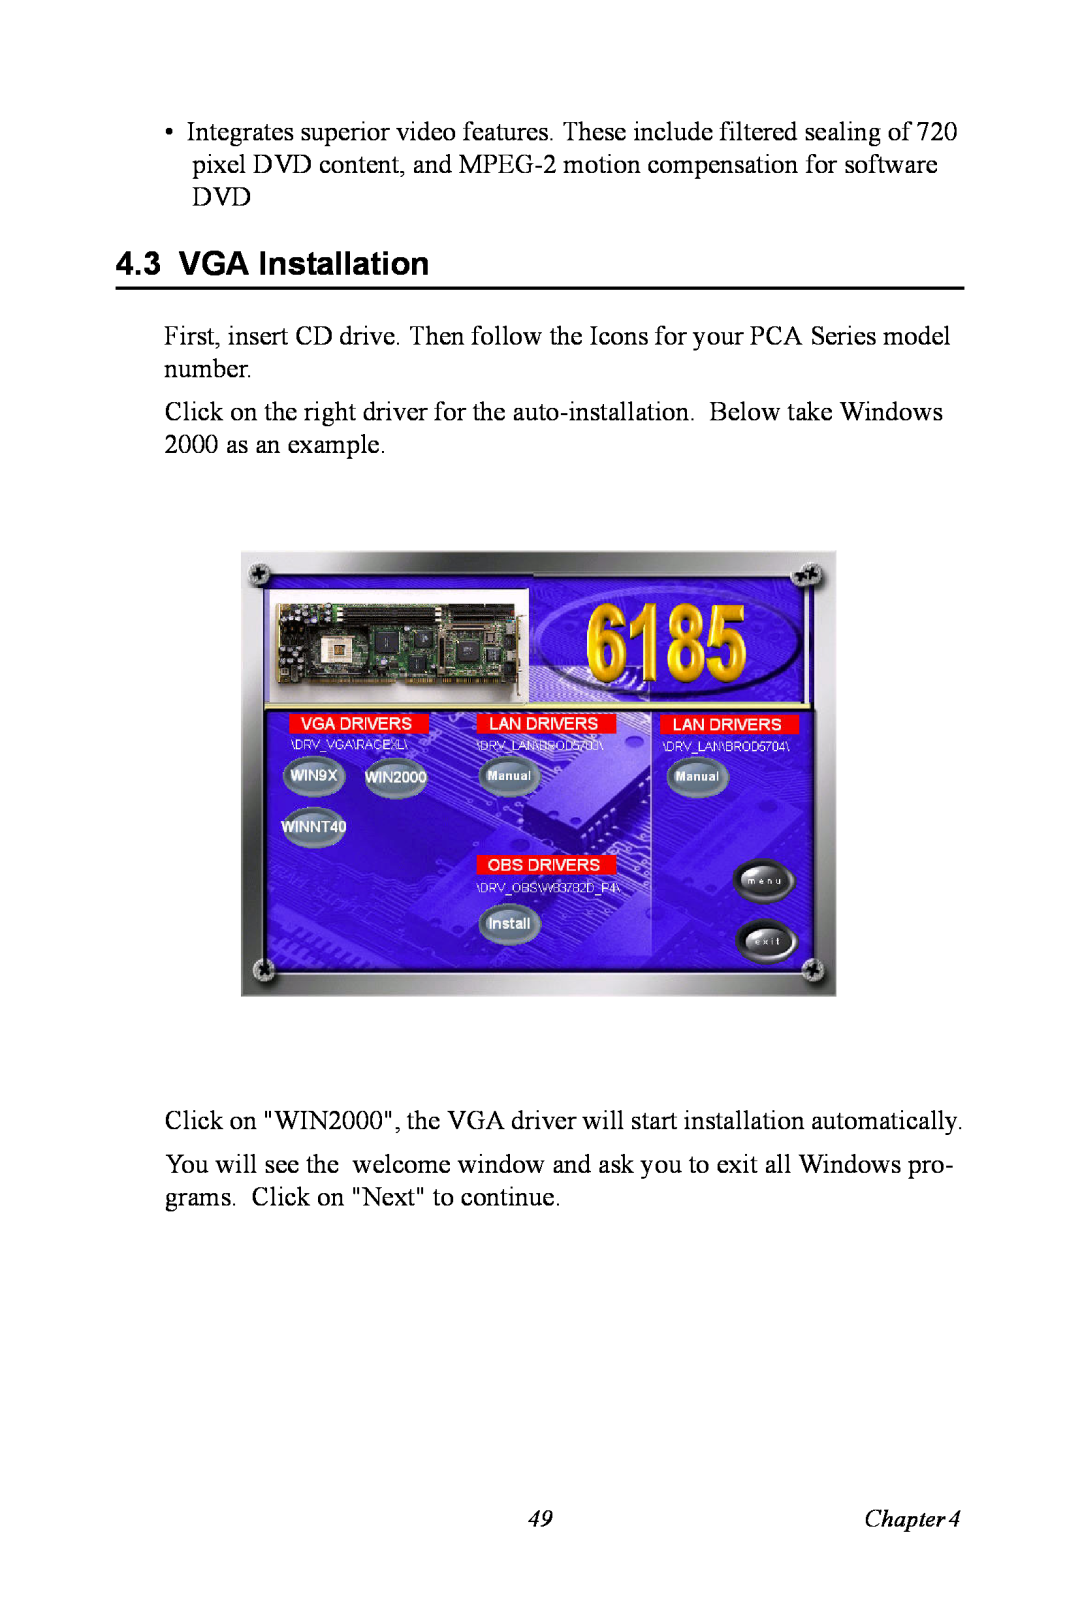 Advantech PCA-6185 user manual VGA Installation 